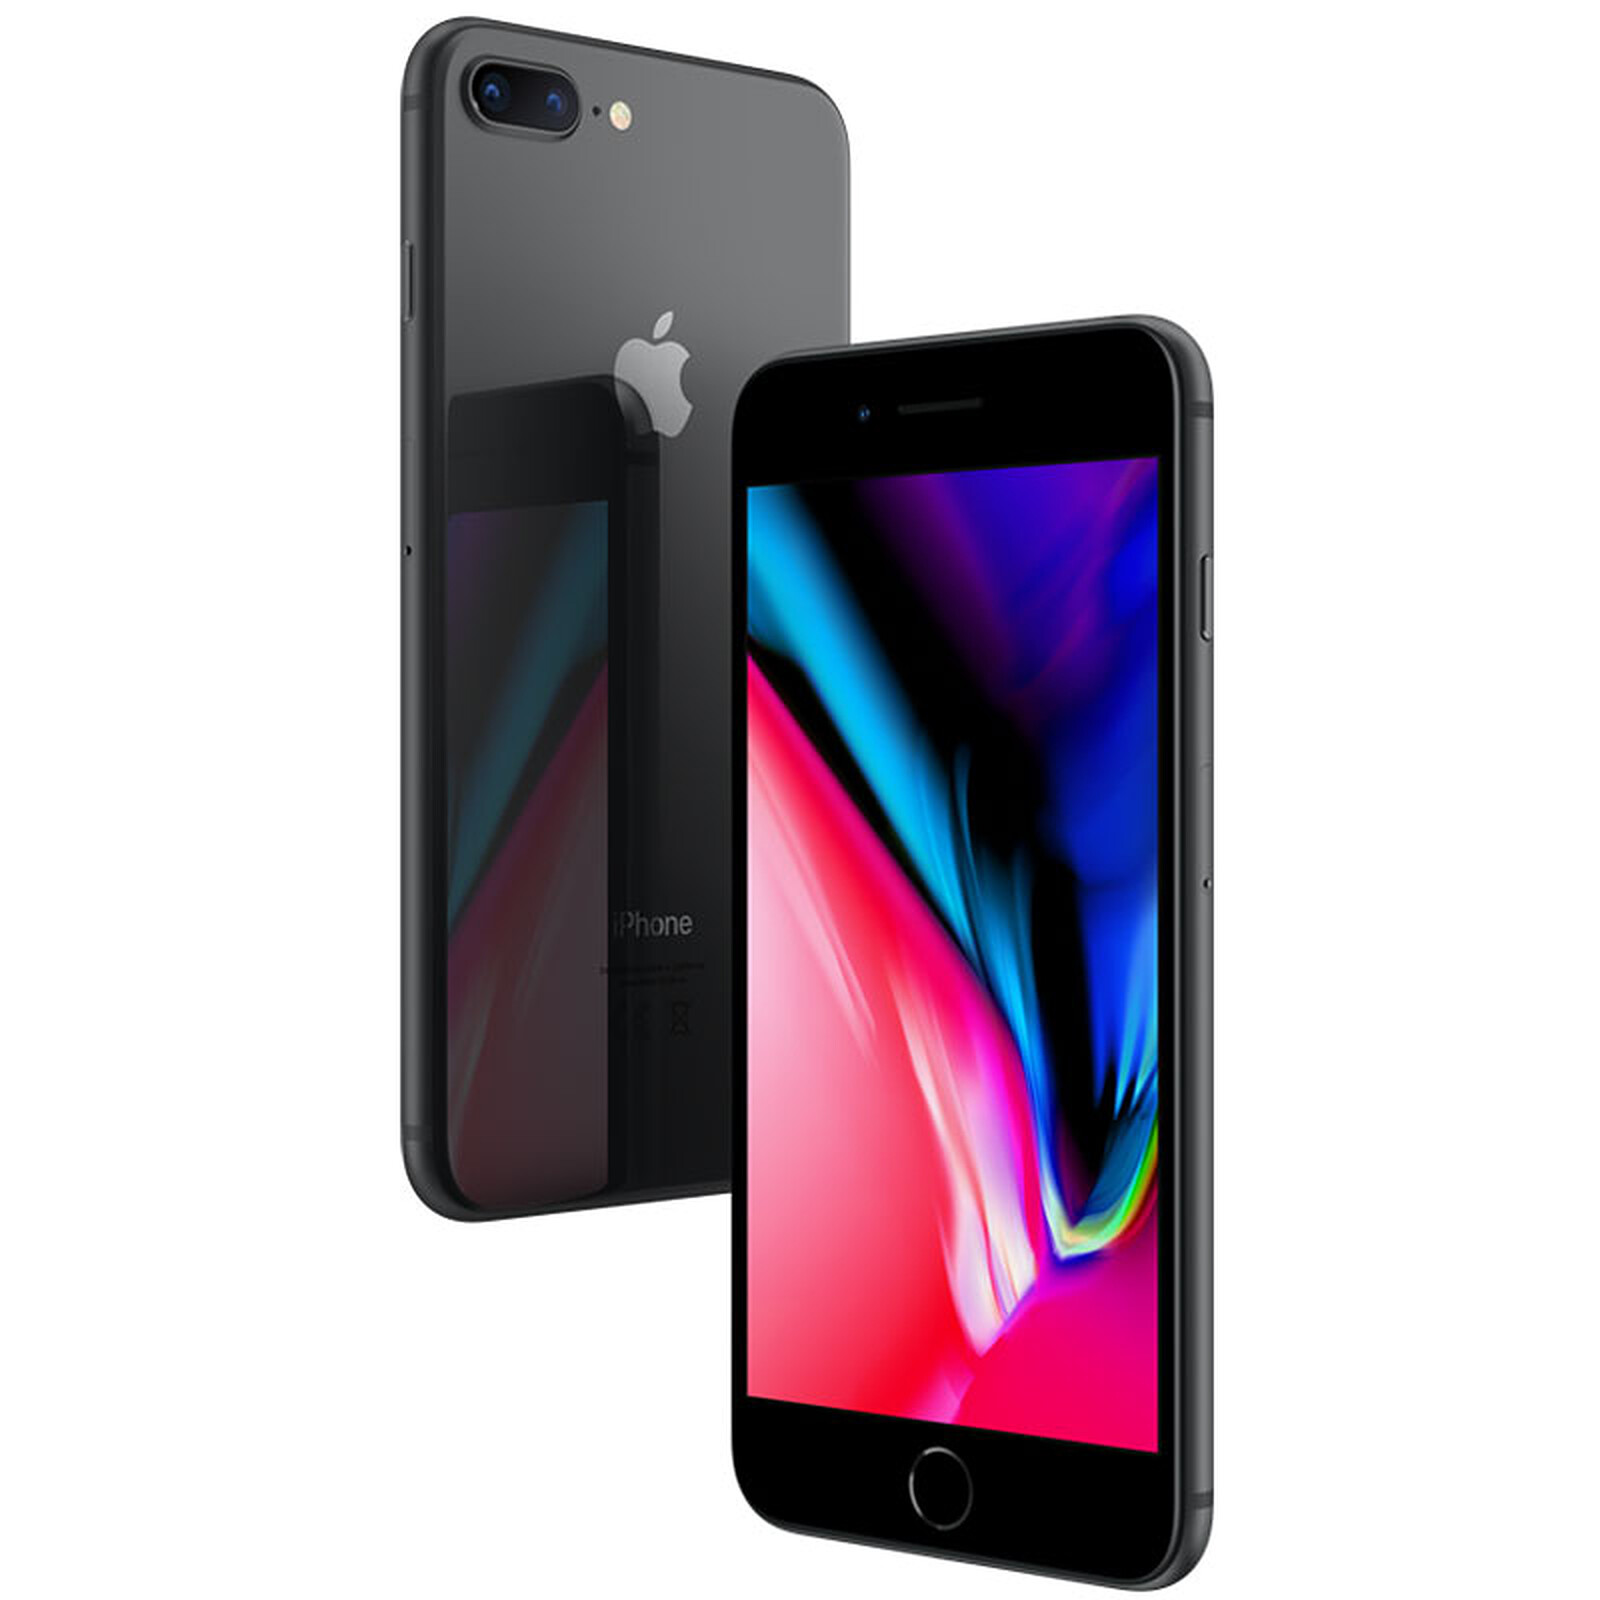 Apple iPhone 8 Plus 256GB Space Grey - Mobile phone & smartphone 